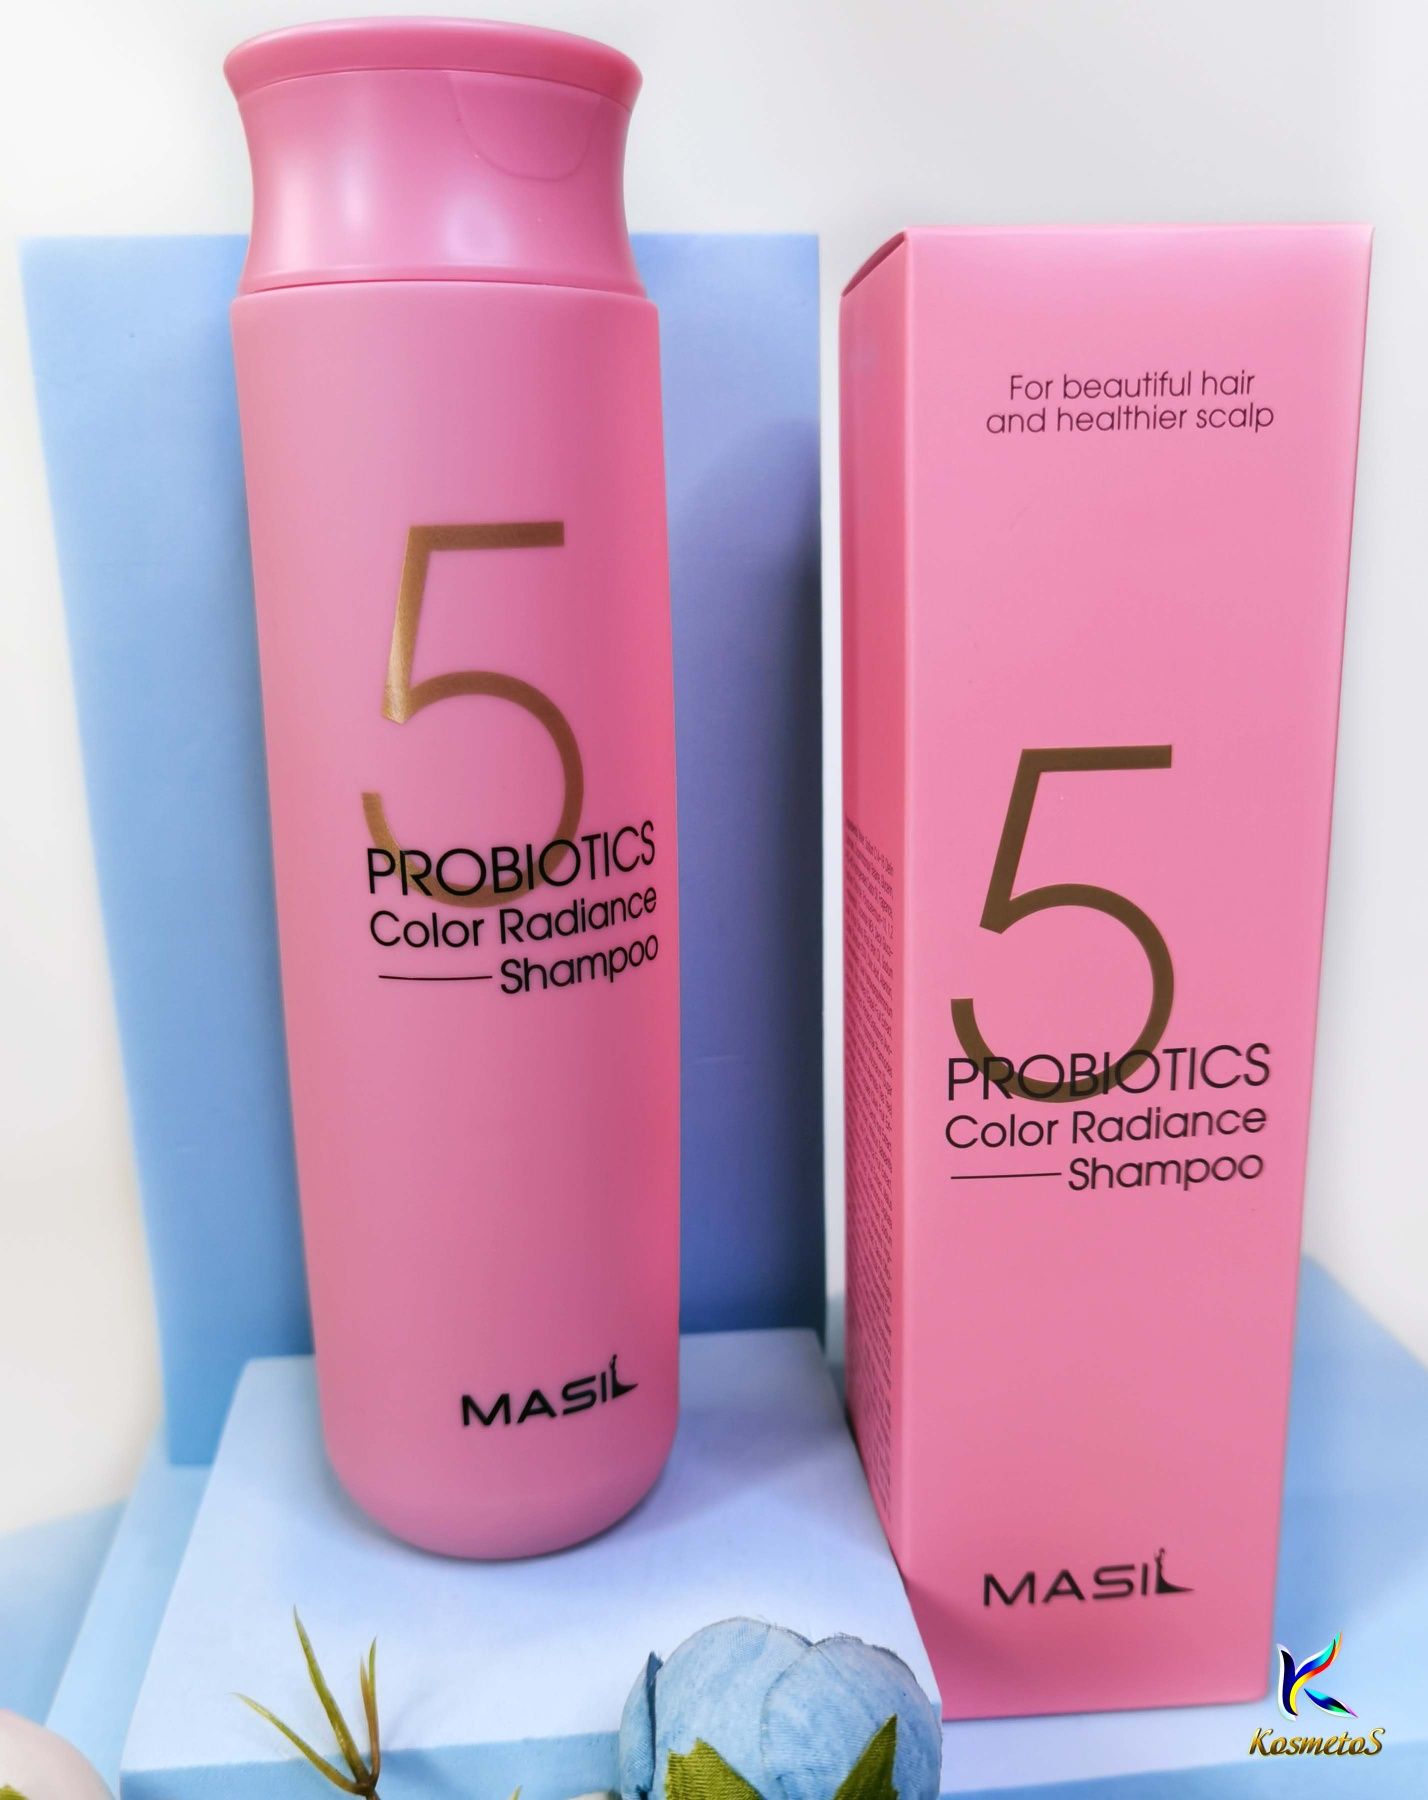 Masil - 5 Probiotics Color Radiance Shampoo - 300 ml Koreański